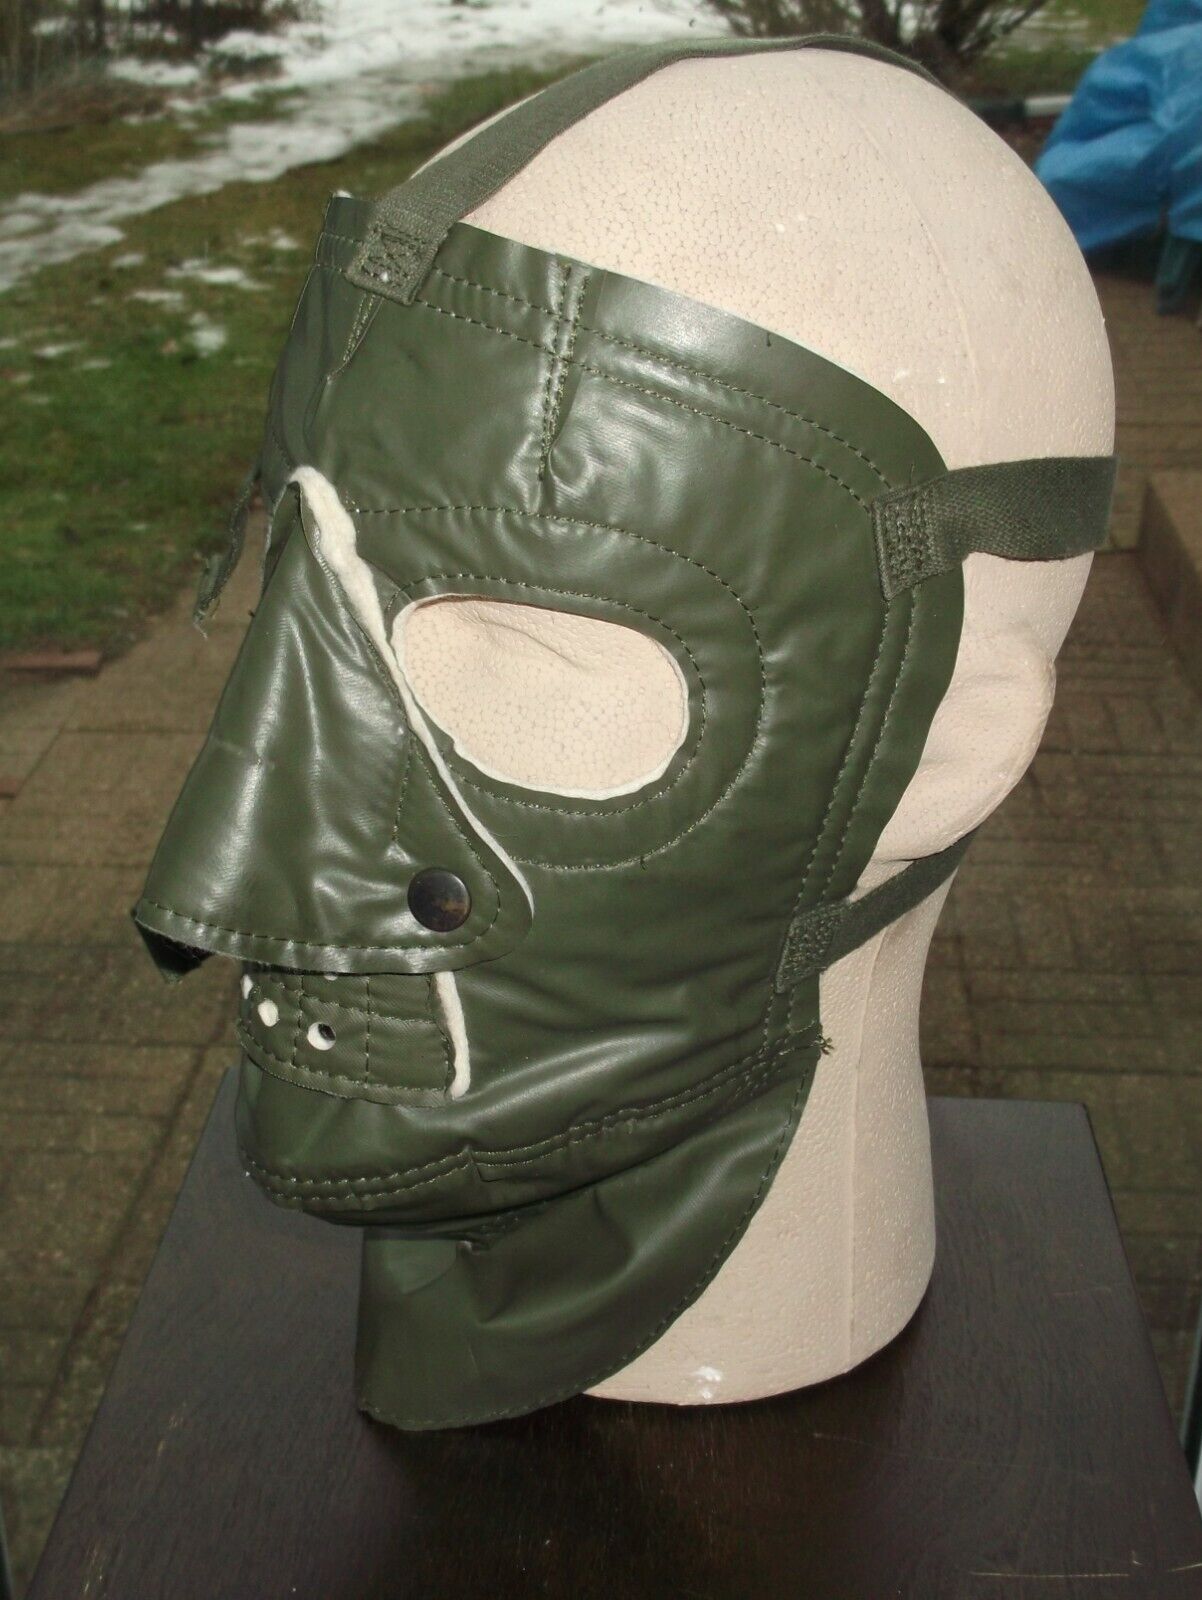 NOS Original Cold War Era U.S. Army Winter Extreme Cold Protective Face Mask.